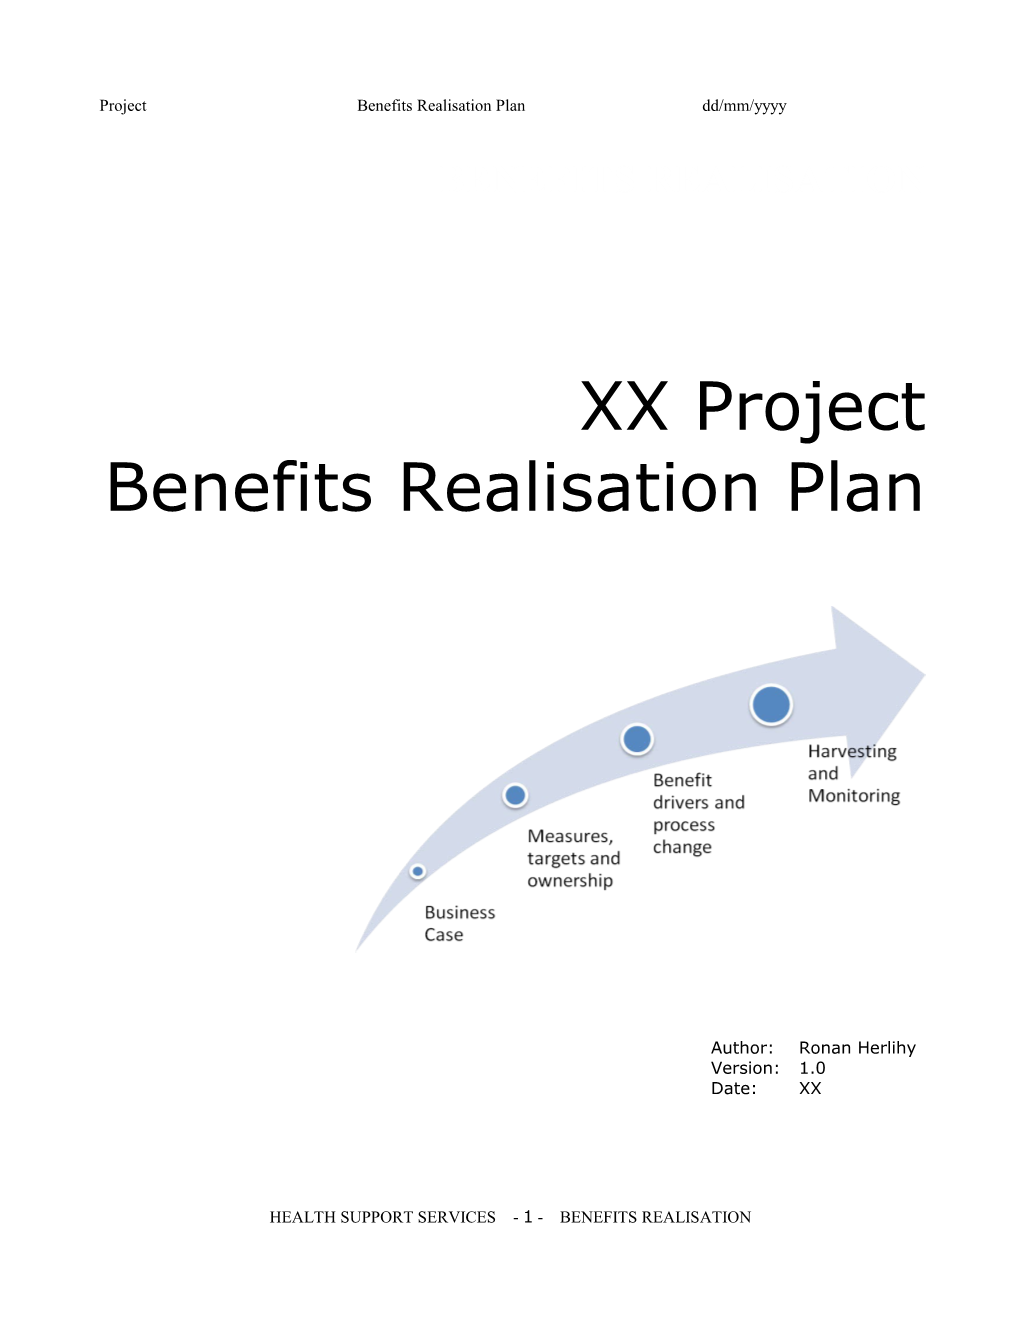 Benefits Realisation Plan Template